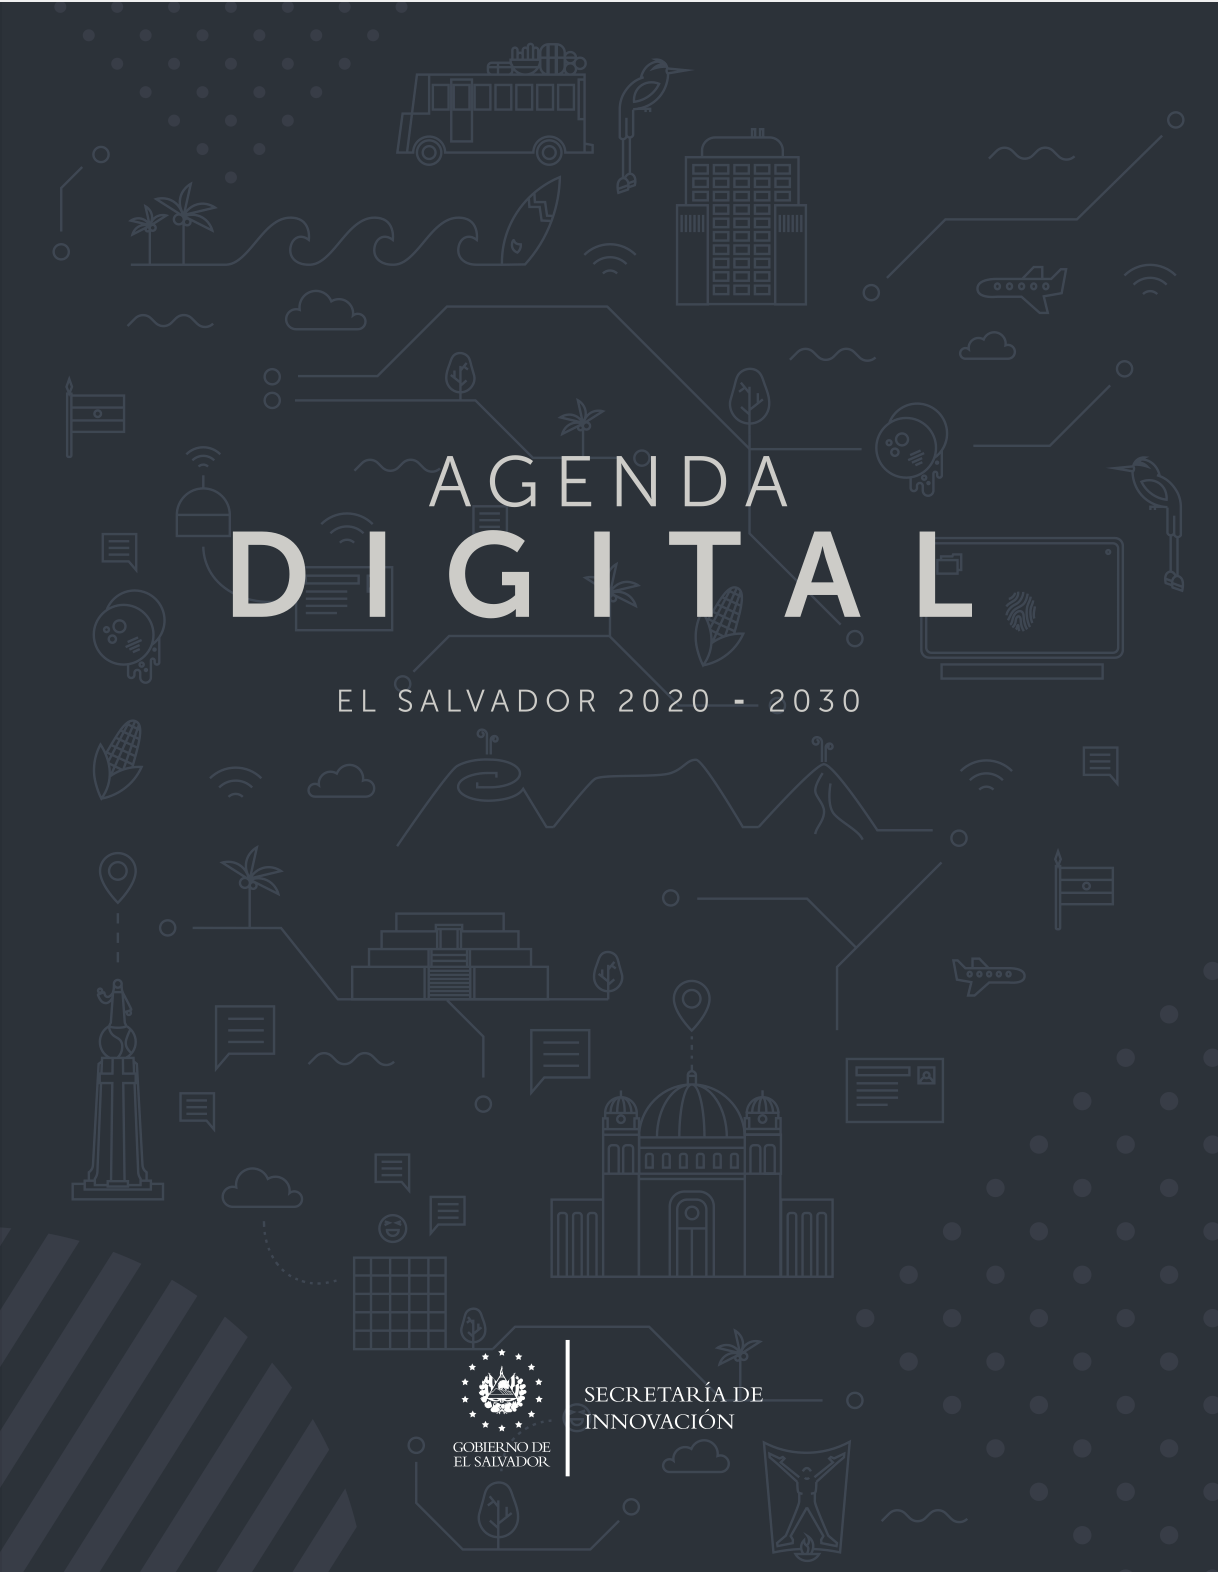 El Salvador Digital Agenda